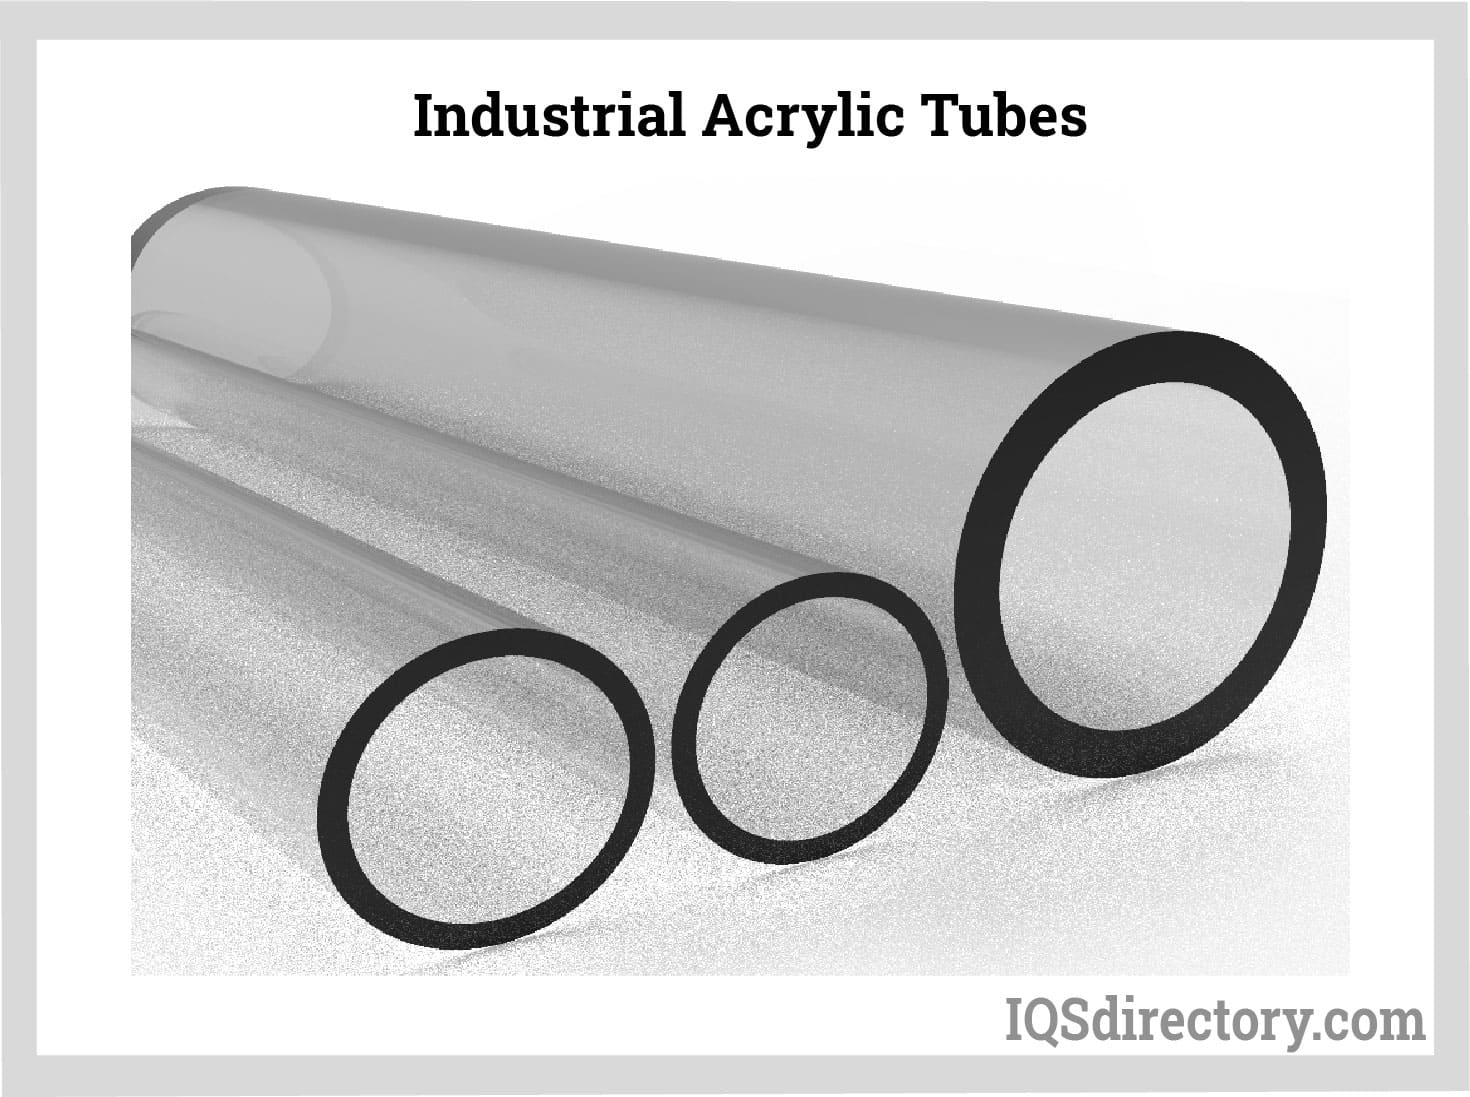 Industrial Acrylic Tubes